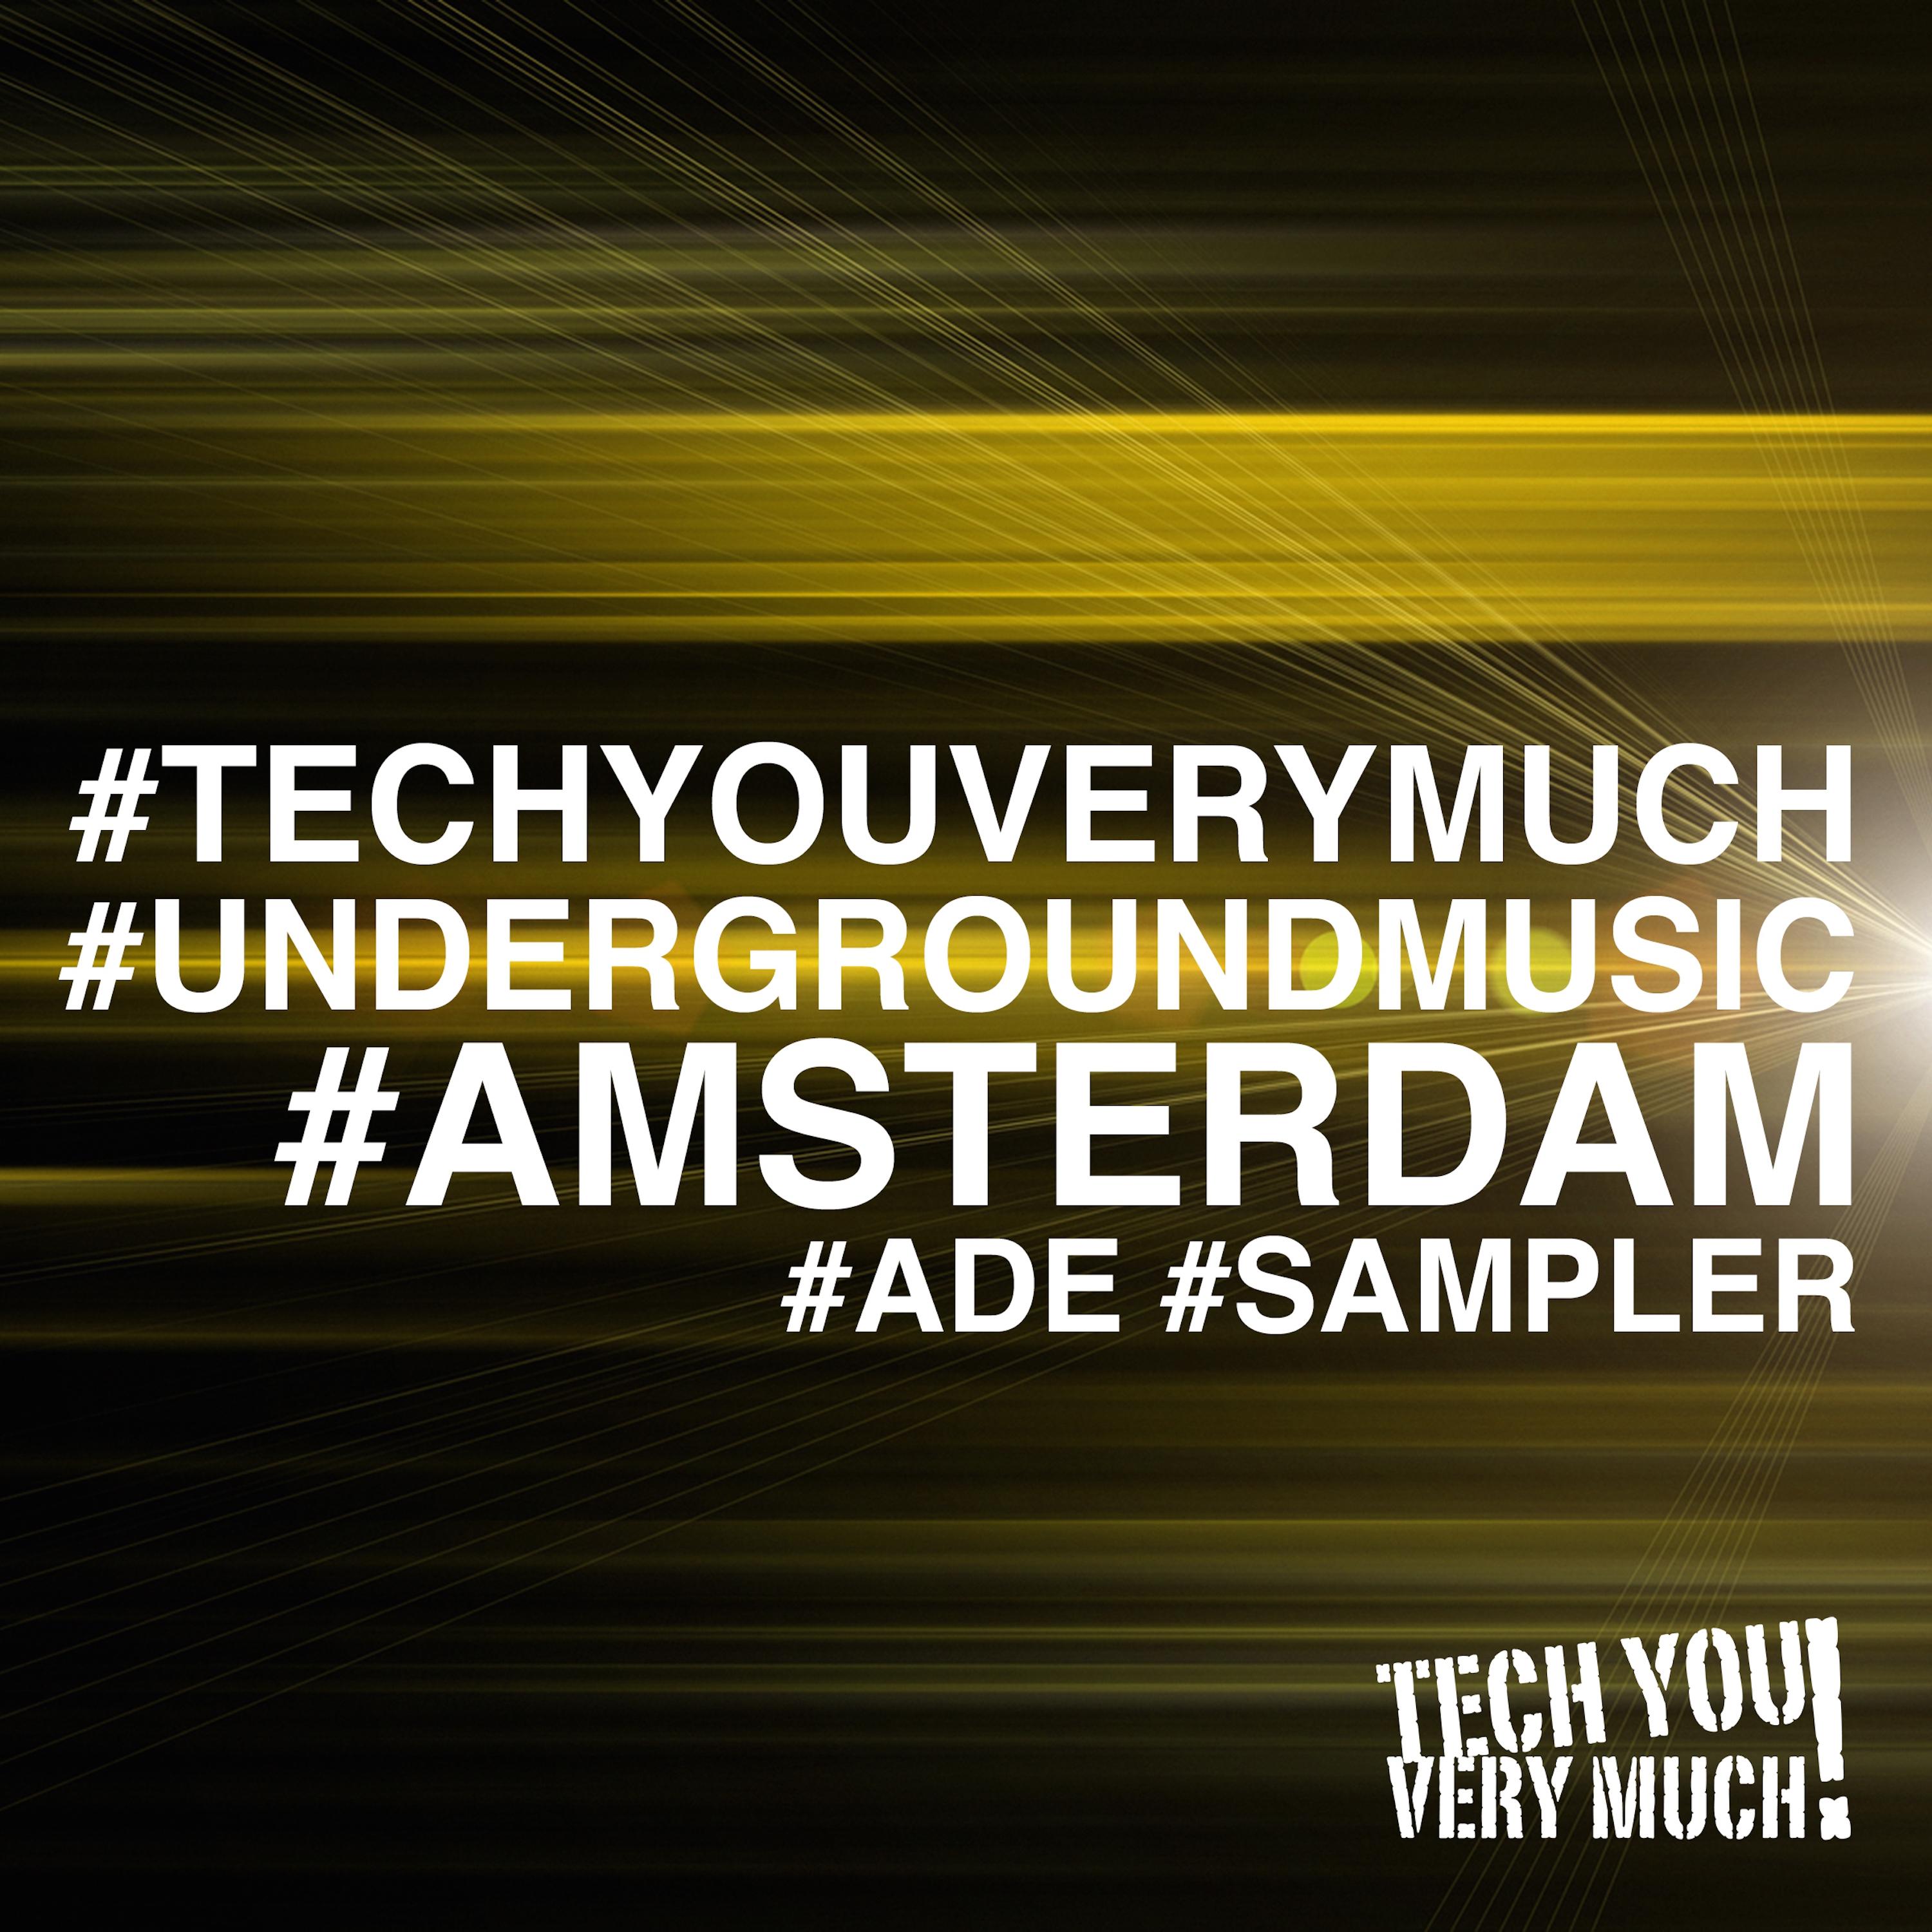 #TechYouVeryMuch #UndergroundMusic #Amsterdam (#ADE #Sampler)